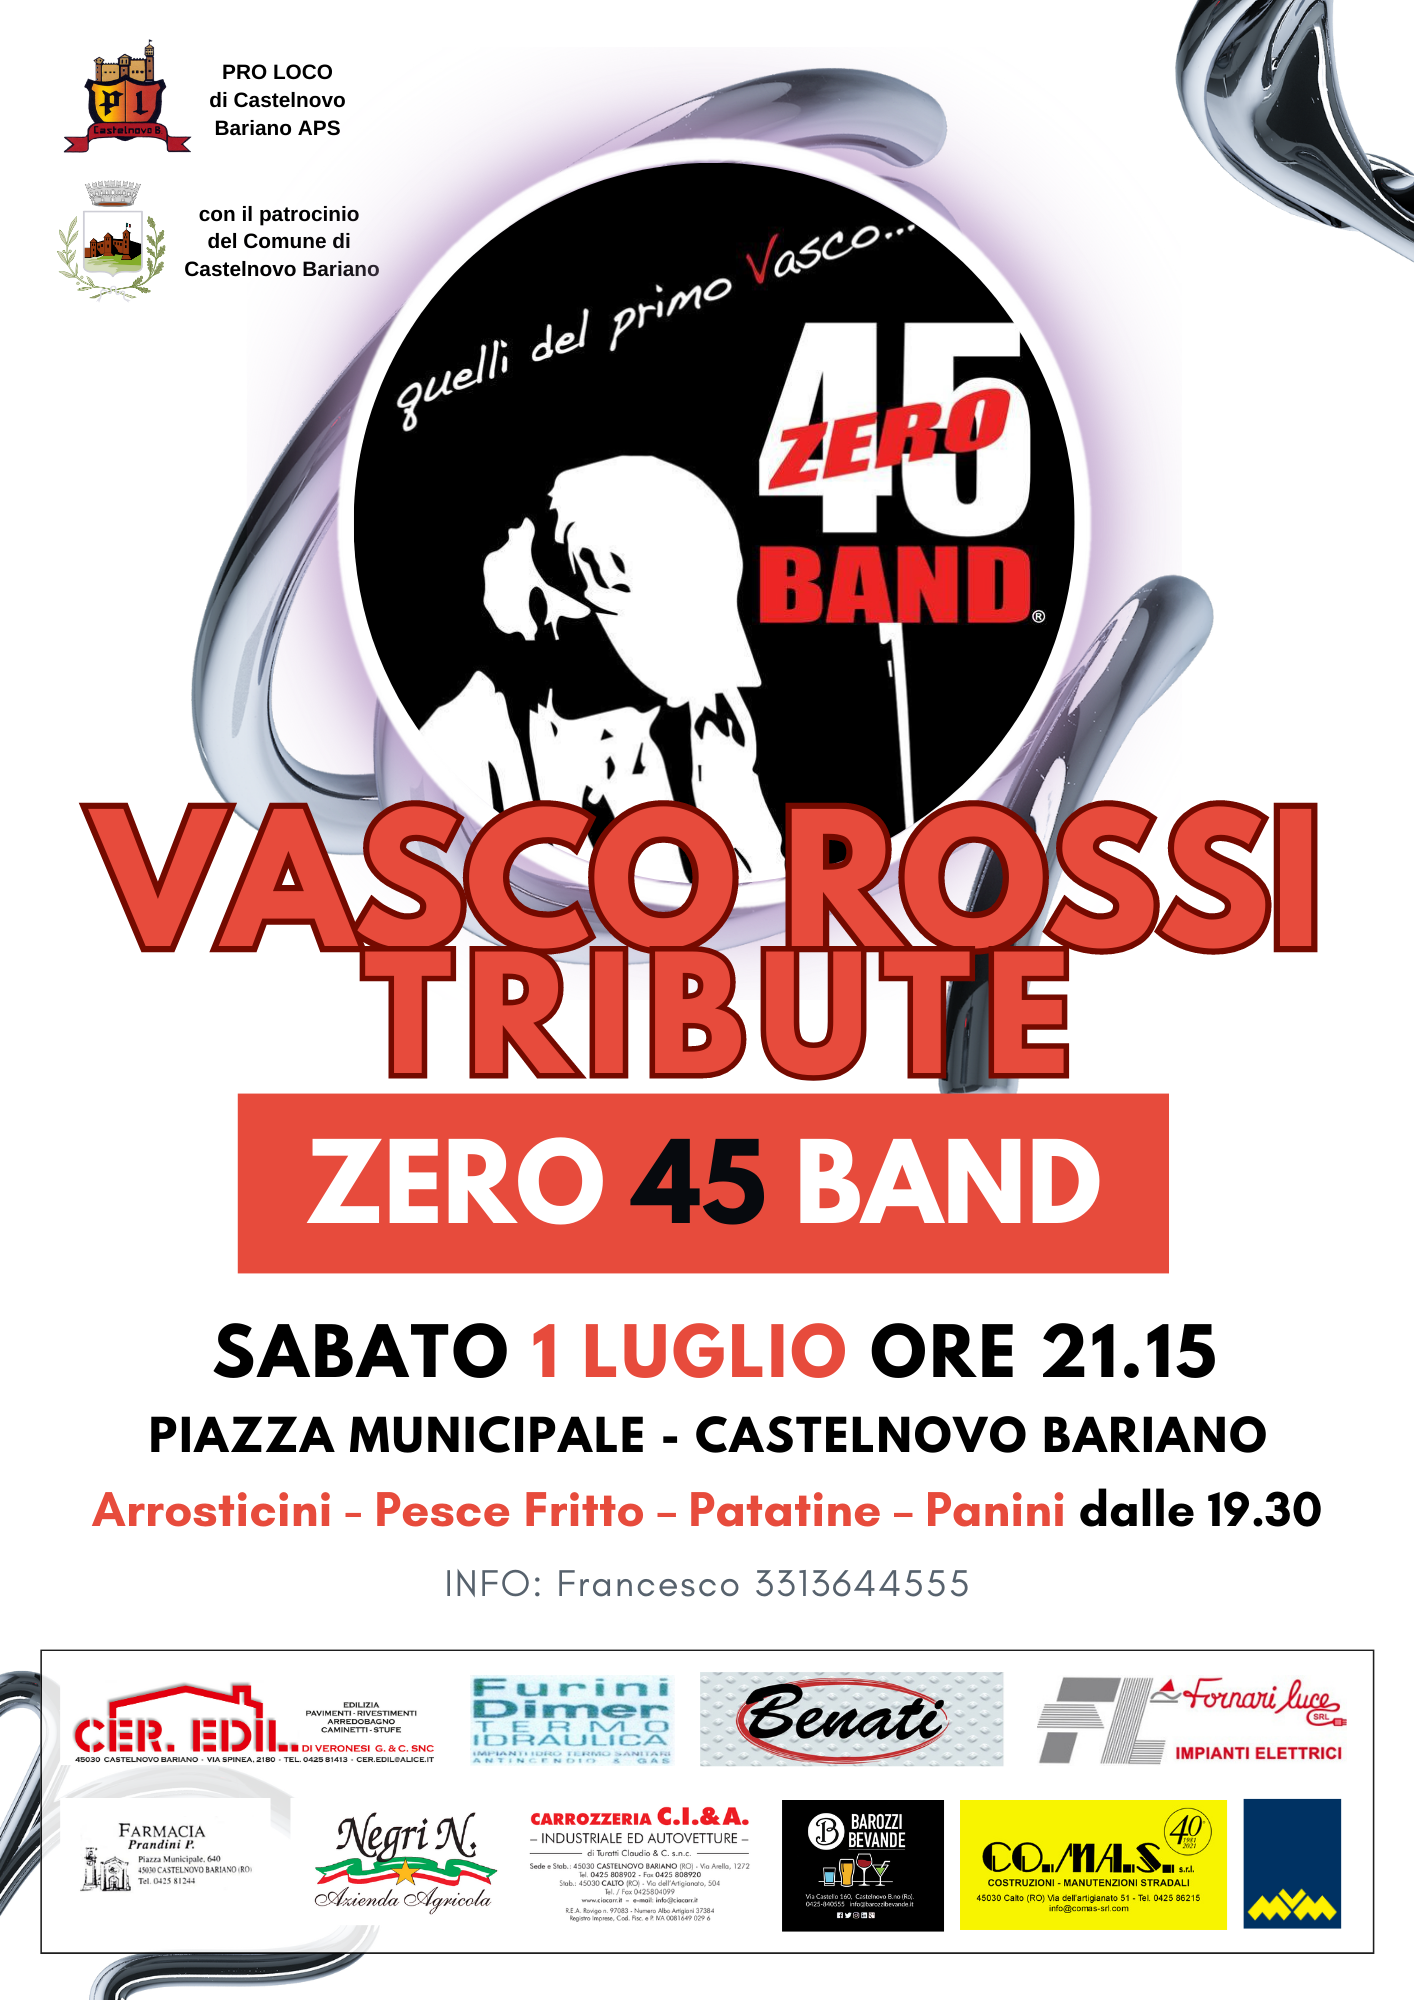 Vasco Rossi Tribute Zero 45 Band